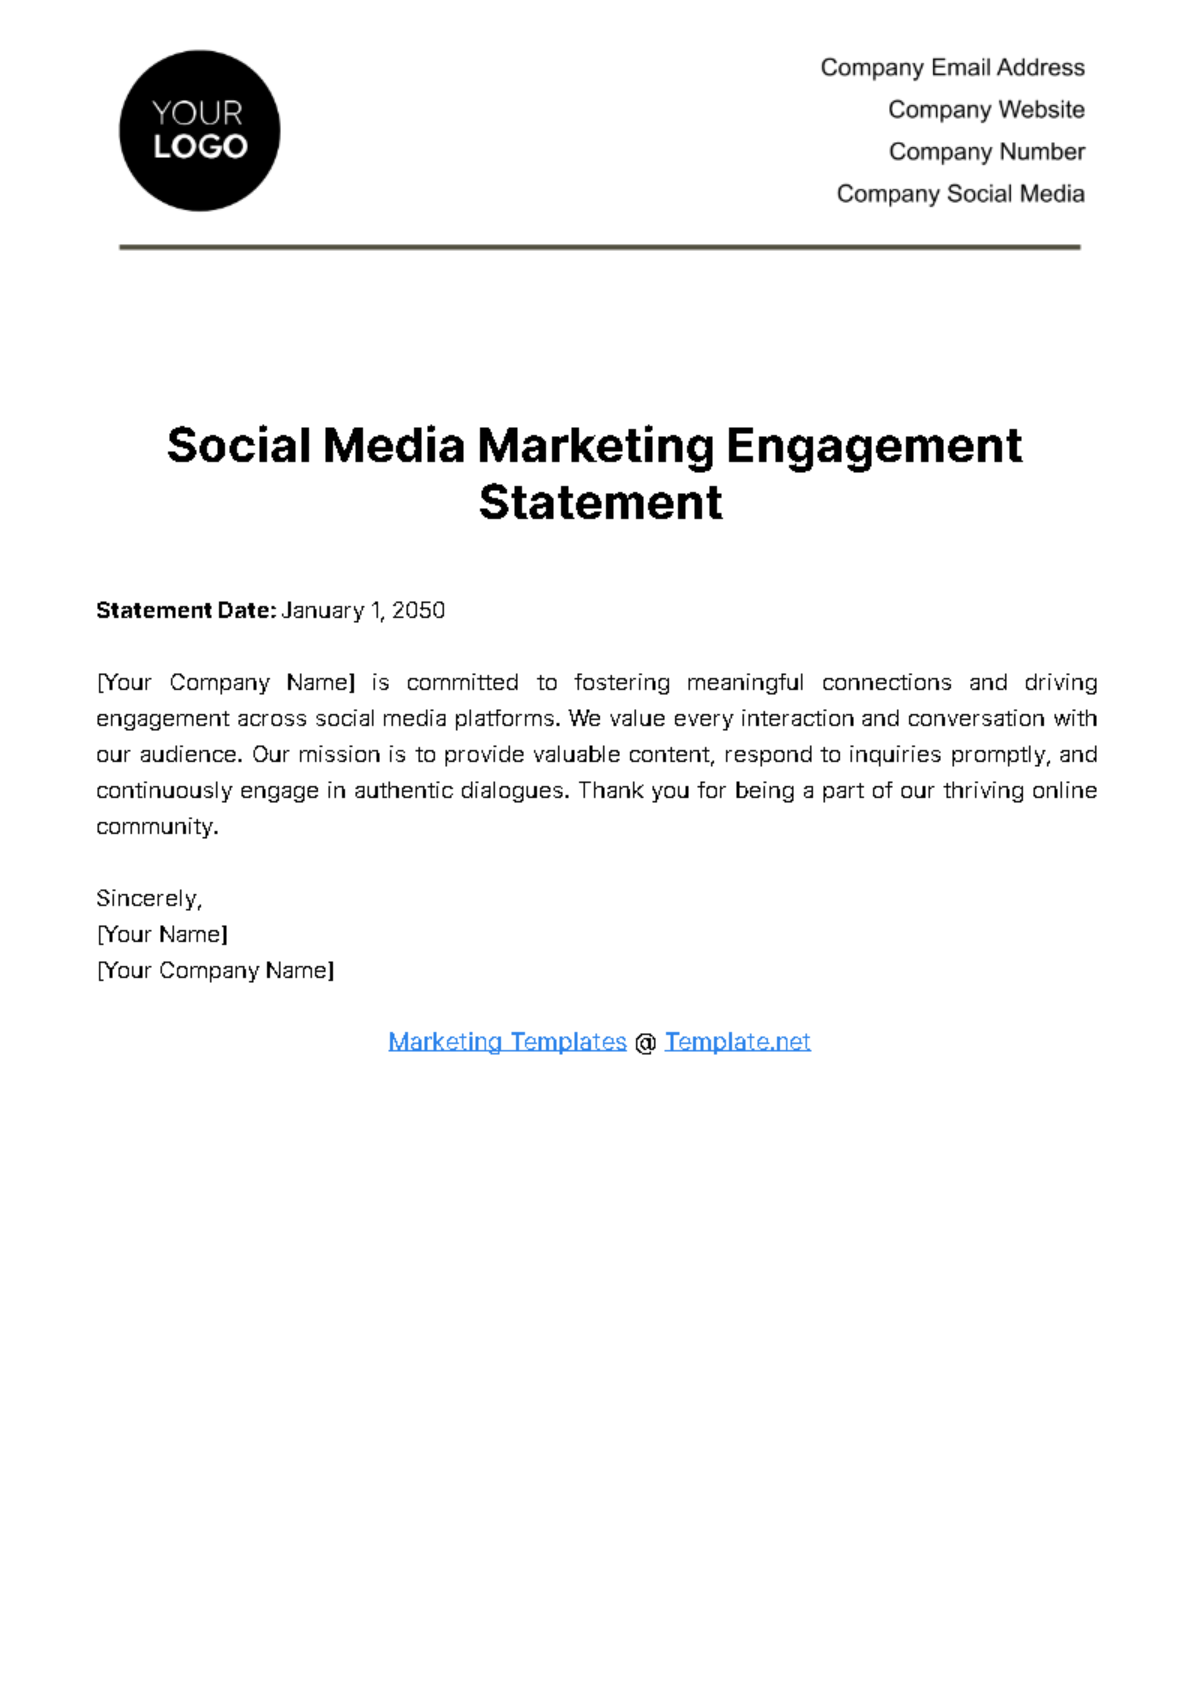 Social Media Marketing Engagement Statement Template